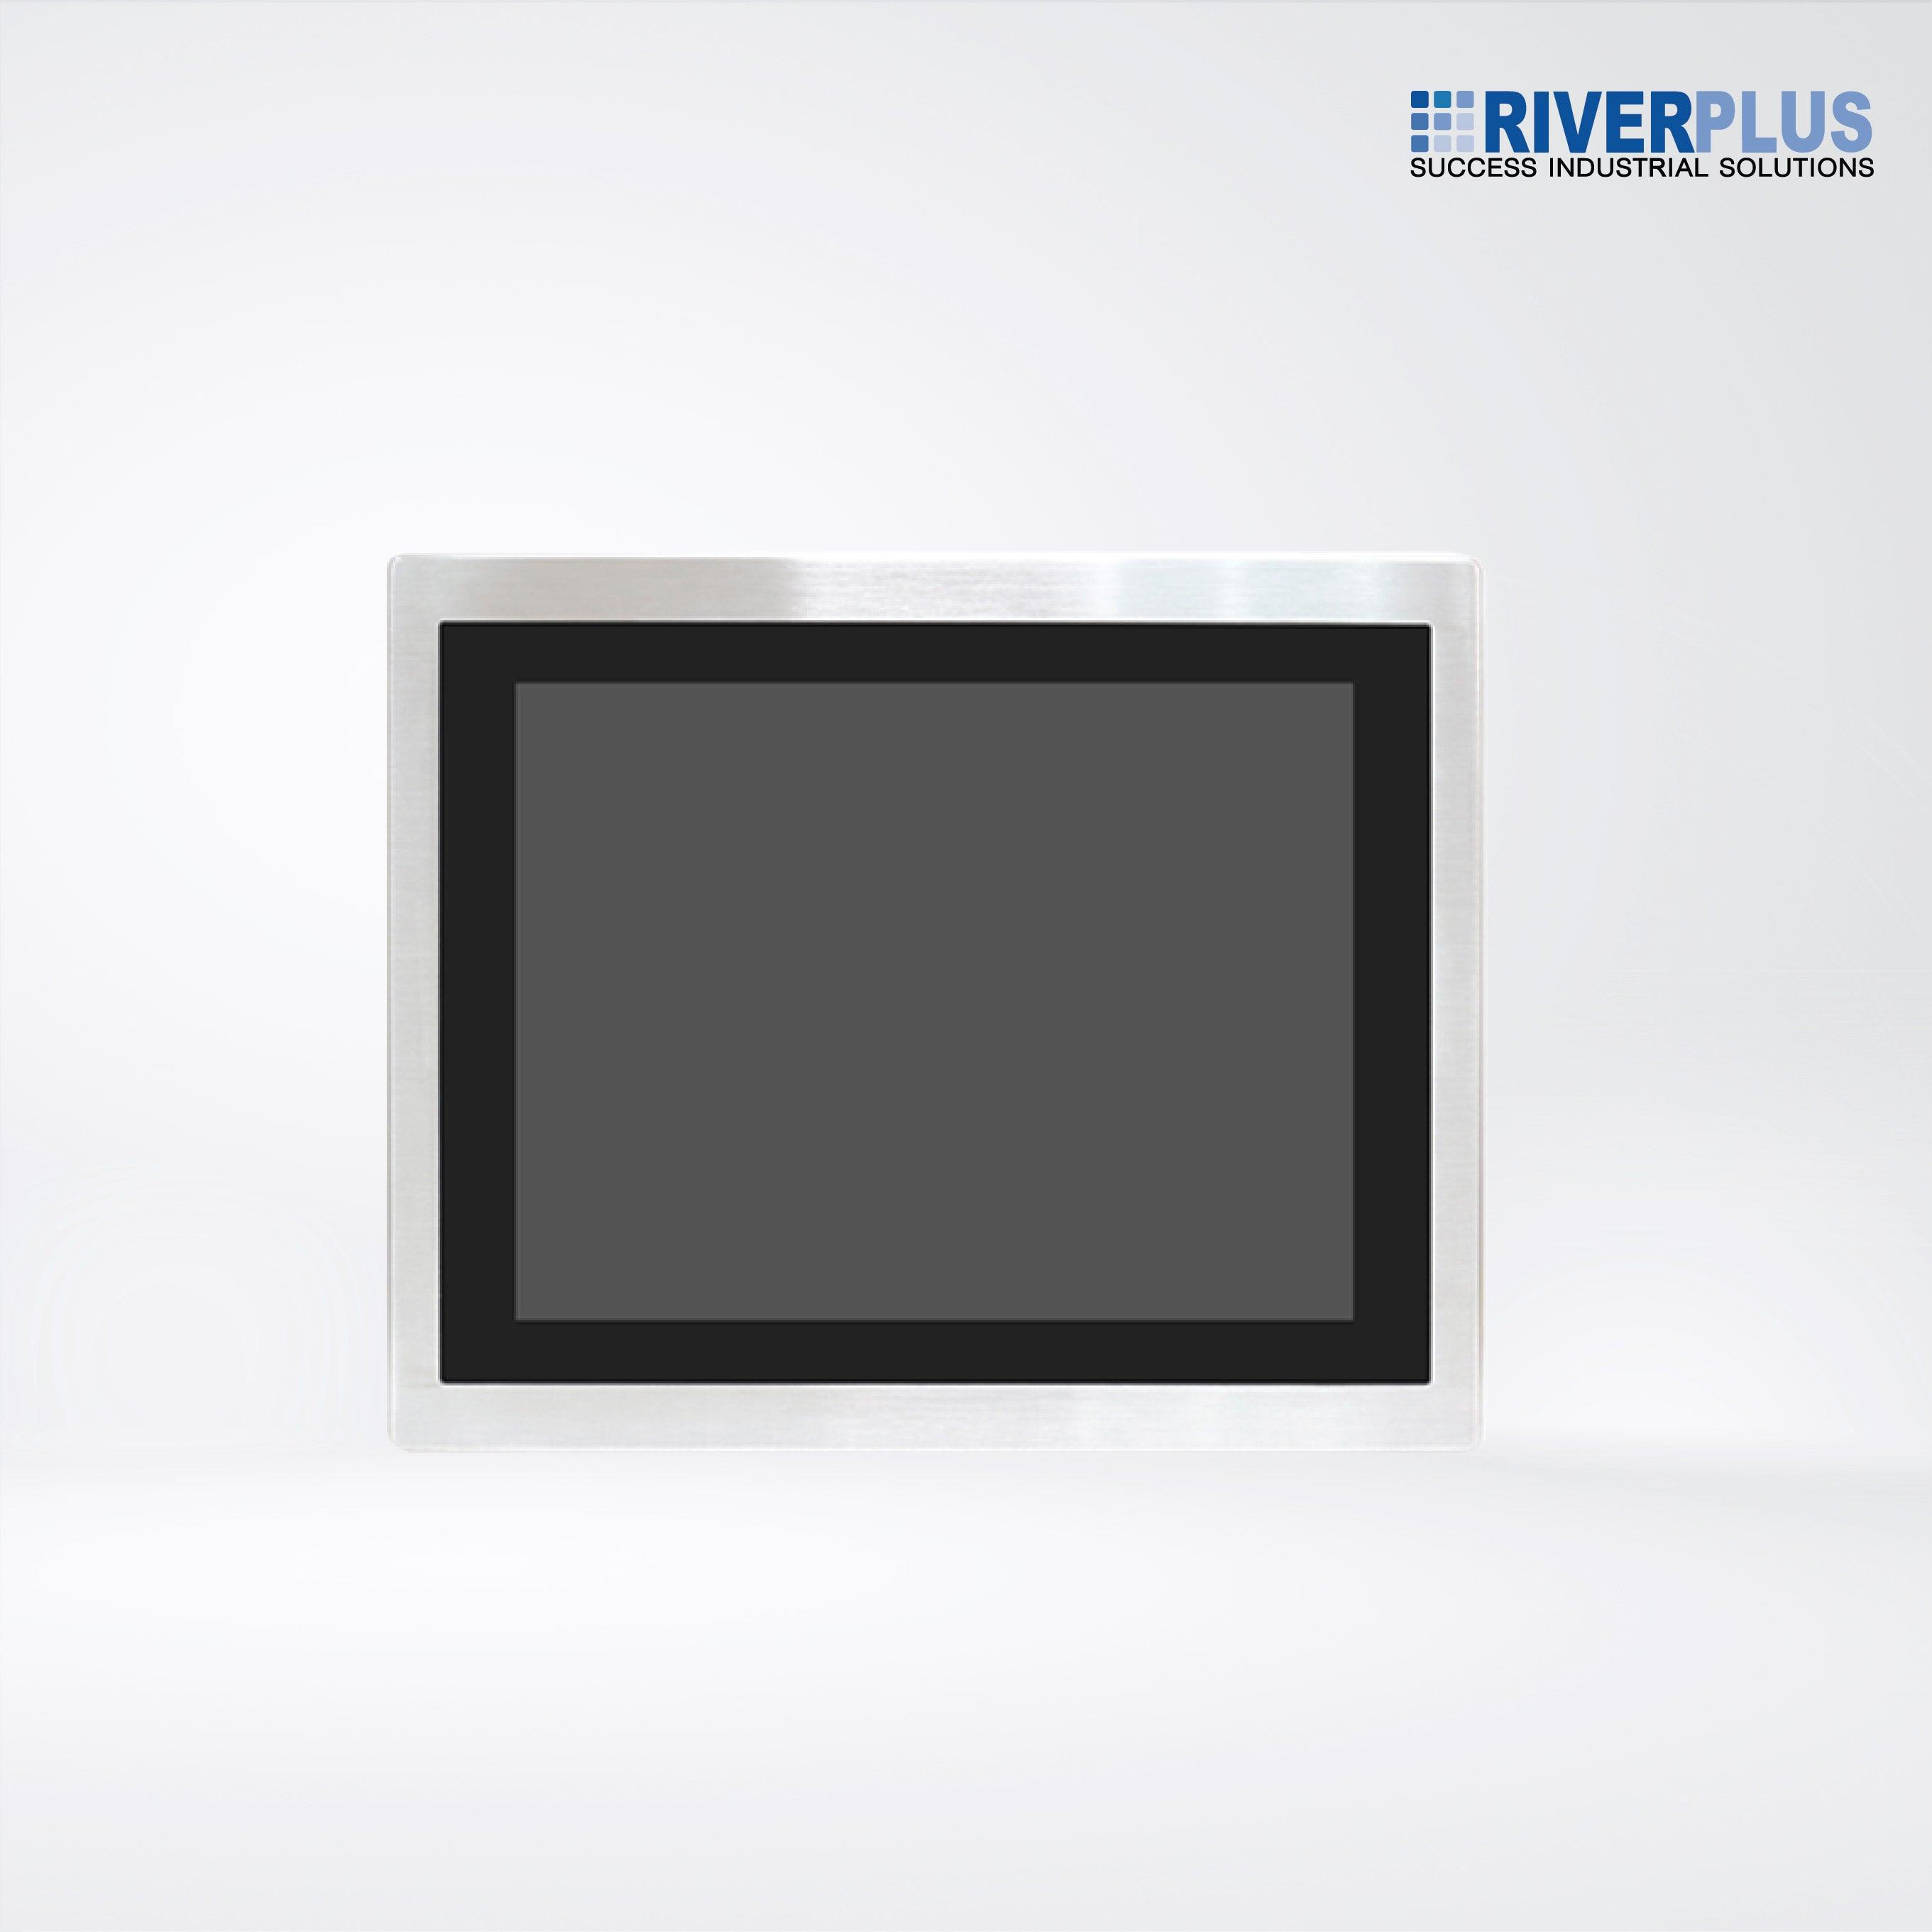 AEx-915AP 15” Intel Skylake IP66 Stainless Steel Panel PC, Luminance : 450 (cd/m²) - Riverplus